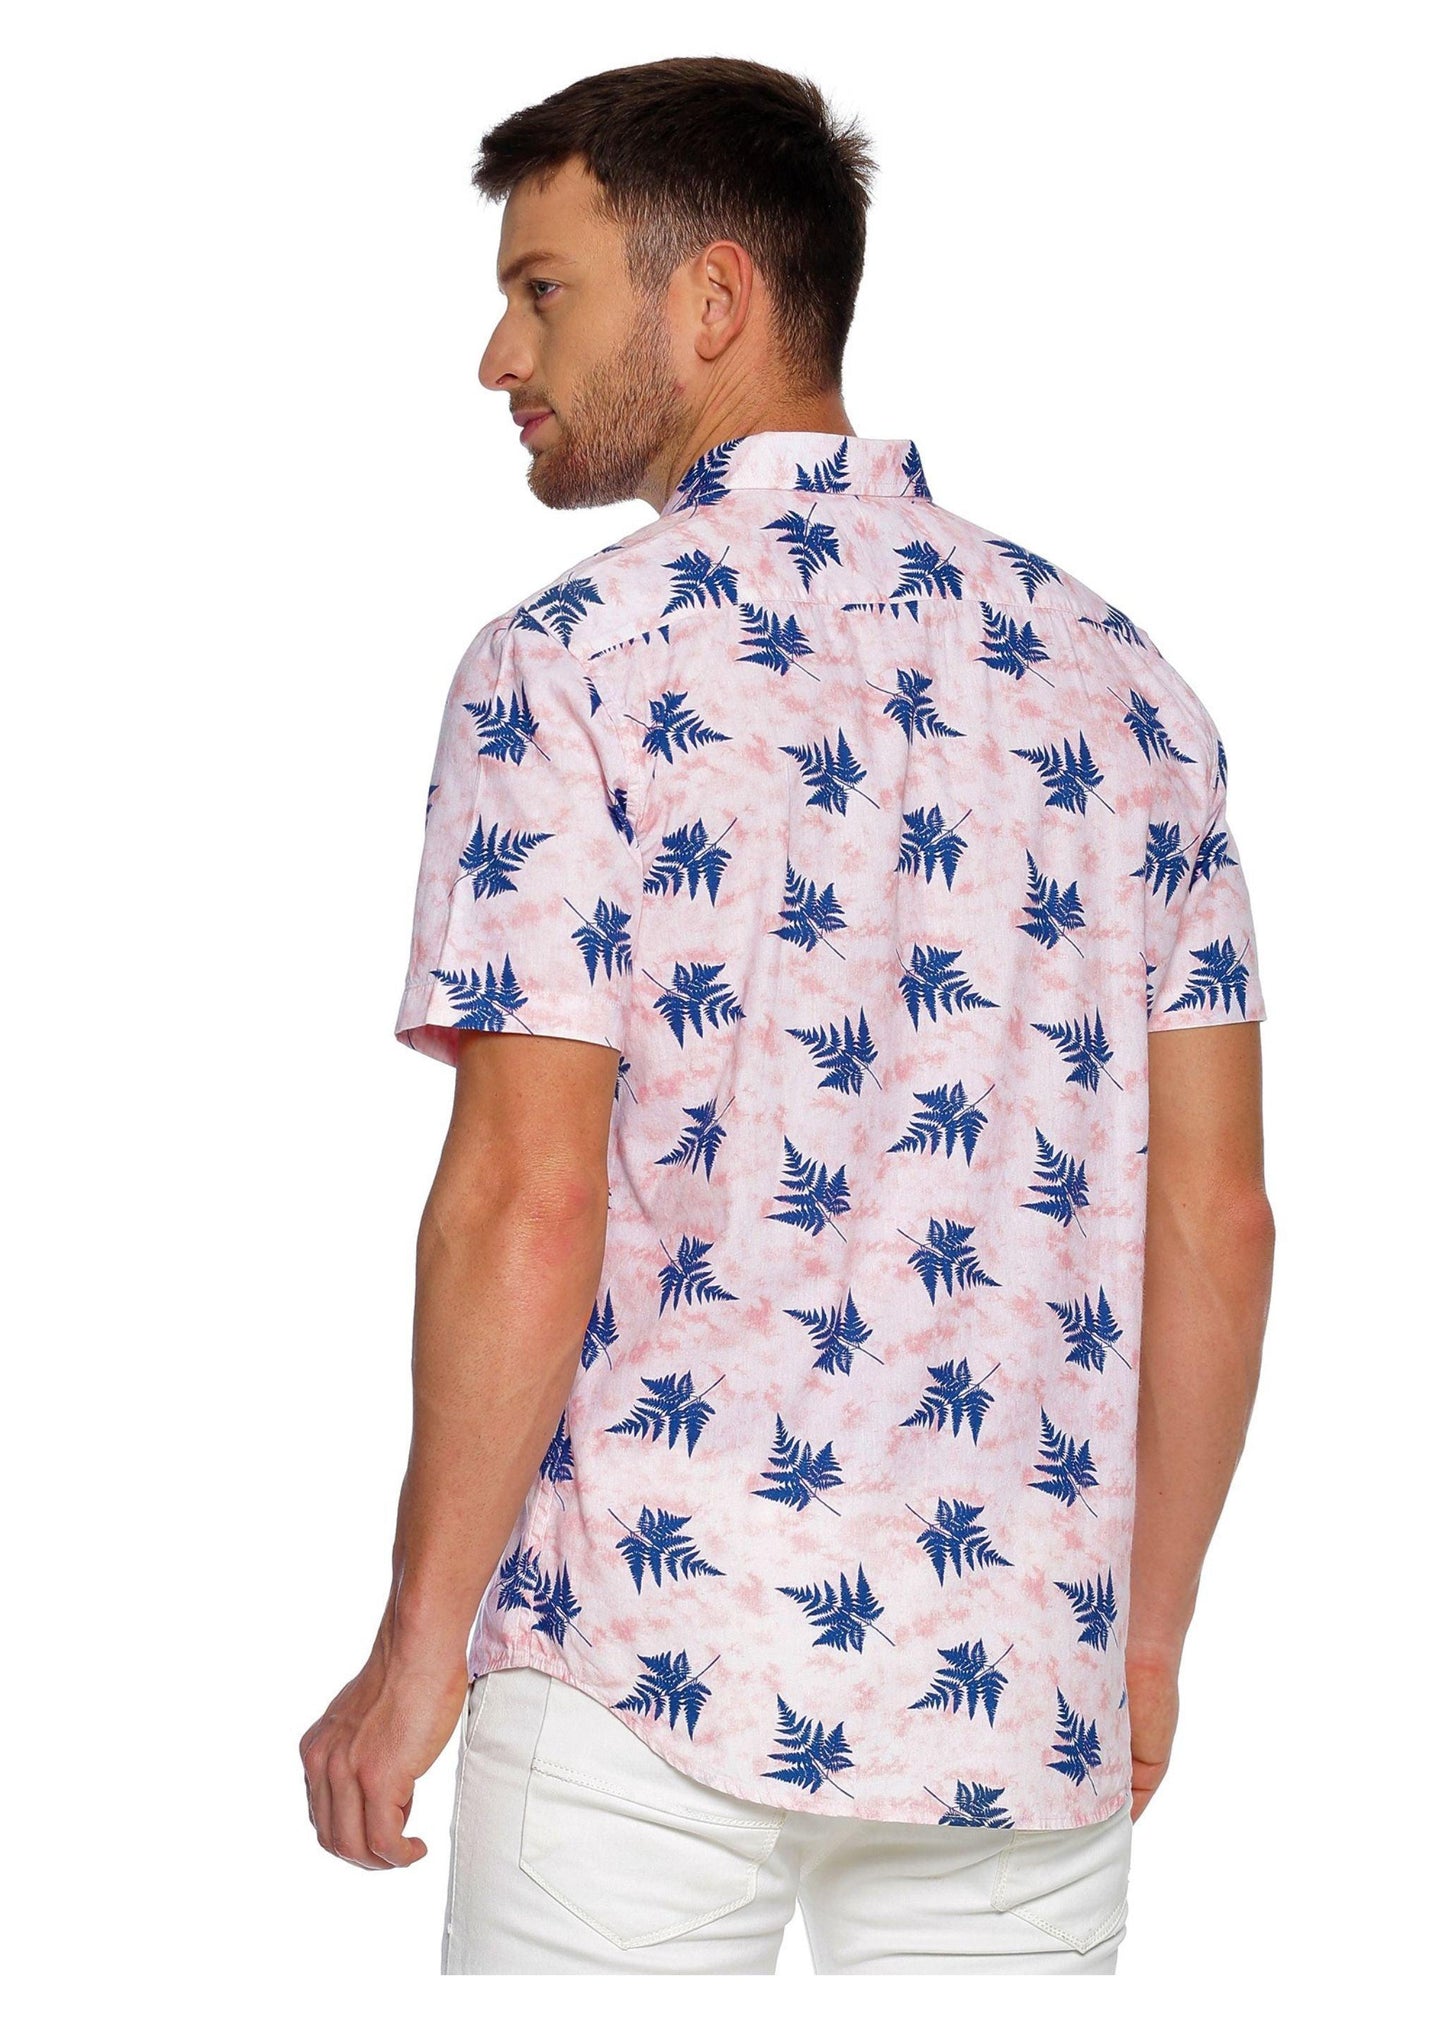 Tusok-leafy-pink-blueVacation-Printed Shirtimage-Pink Aloha (3)